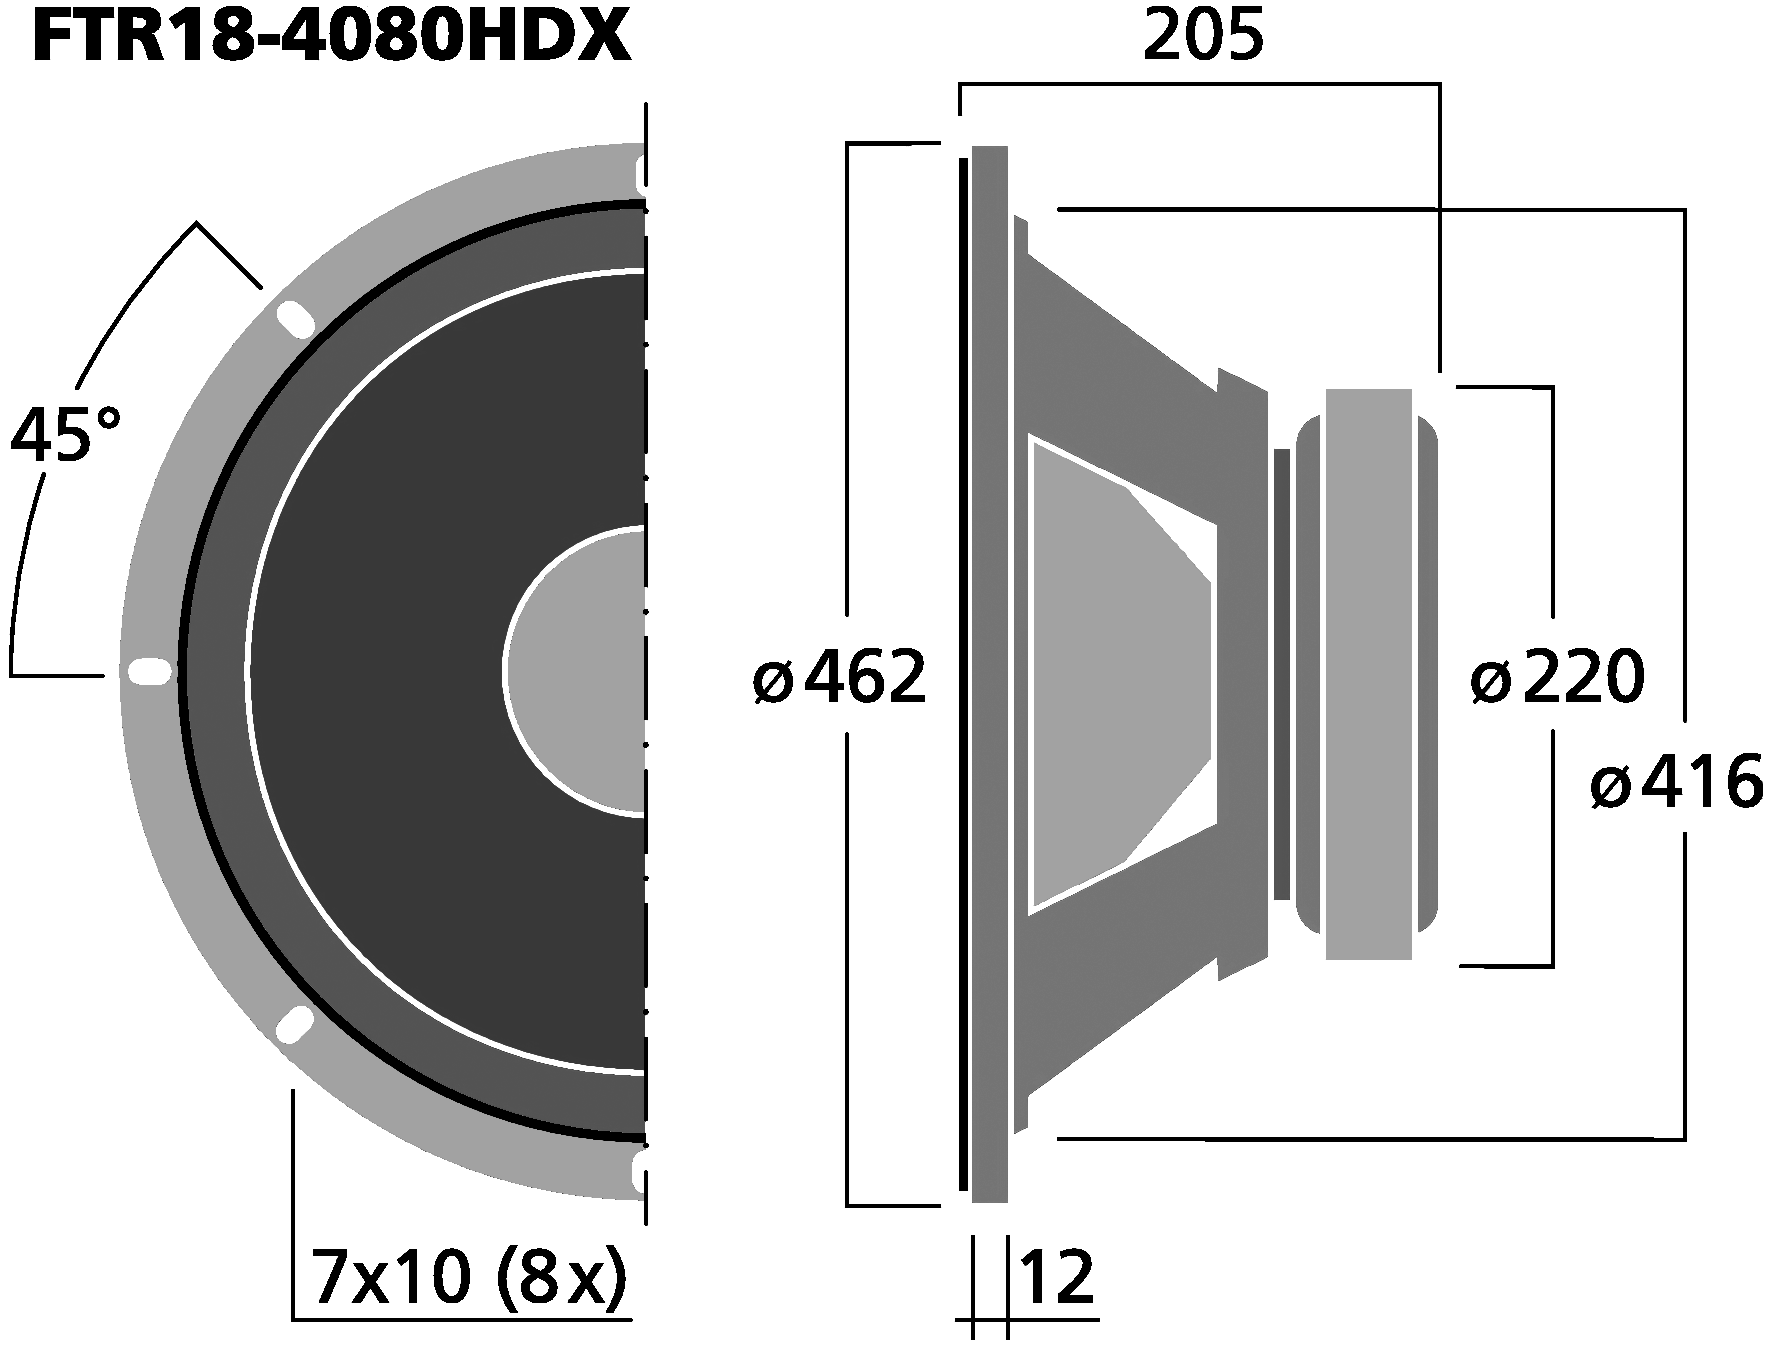 Celestion FTR18-4080HDX Dimensions